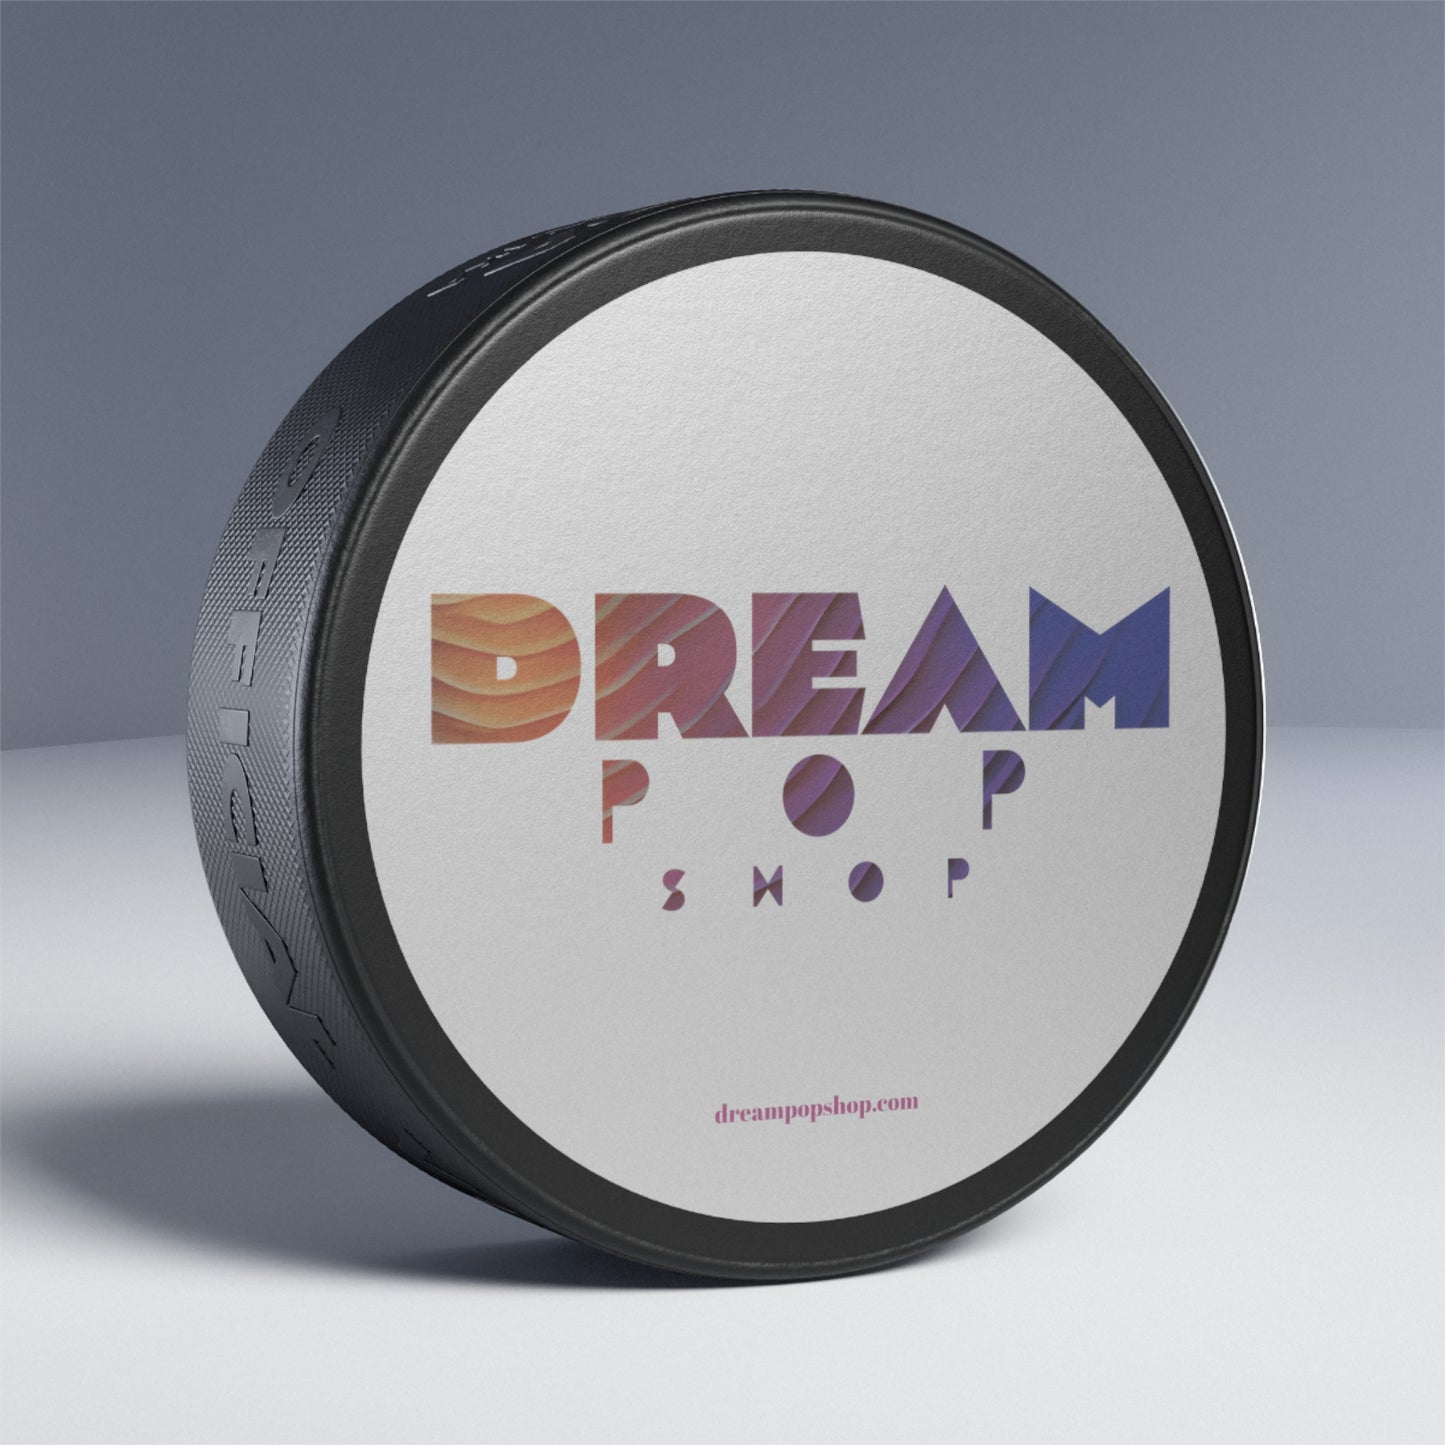 Dream Pop Shop Hockey Puck